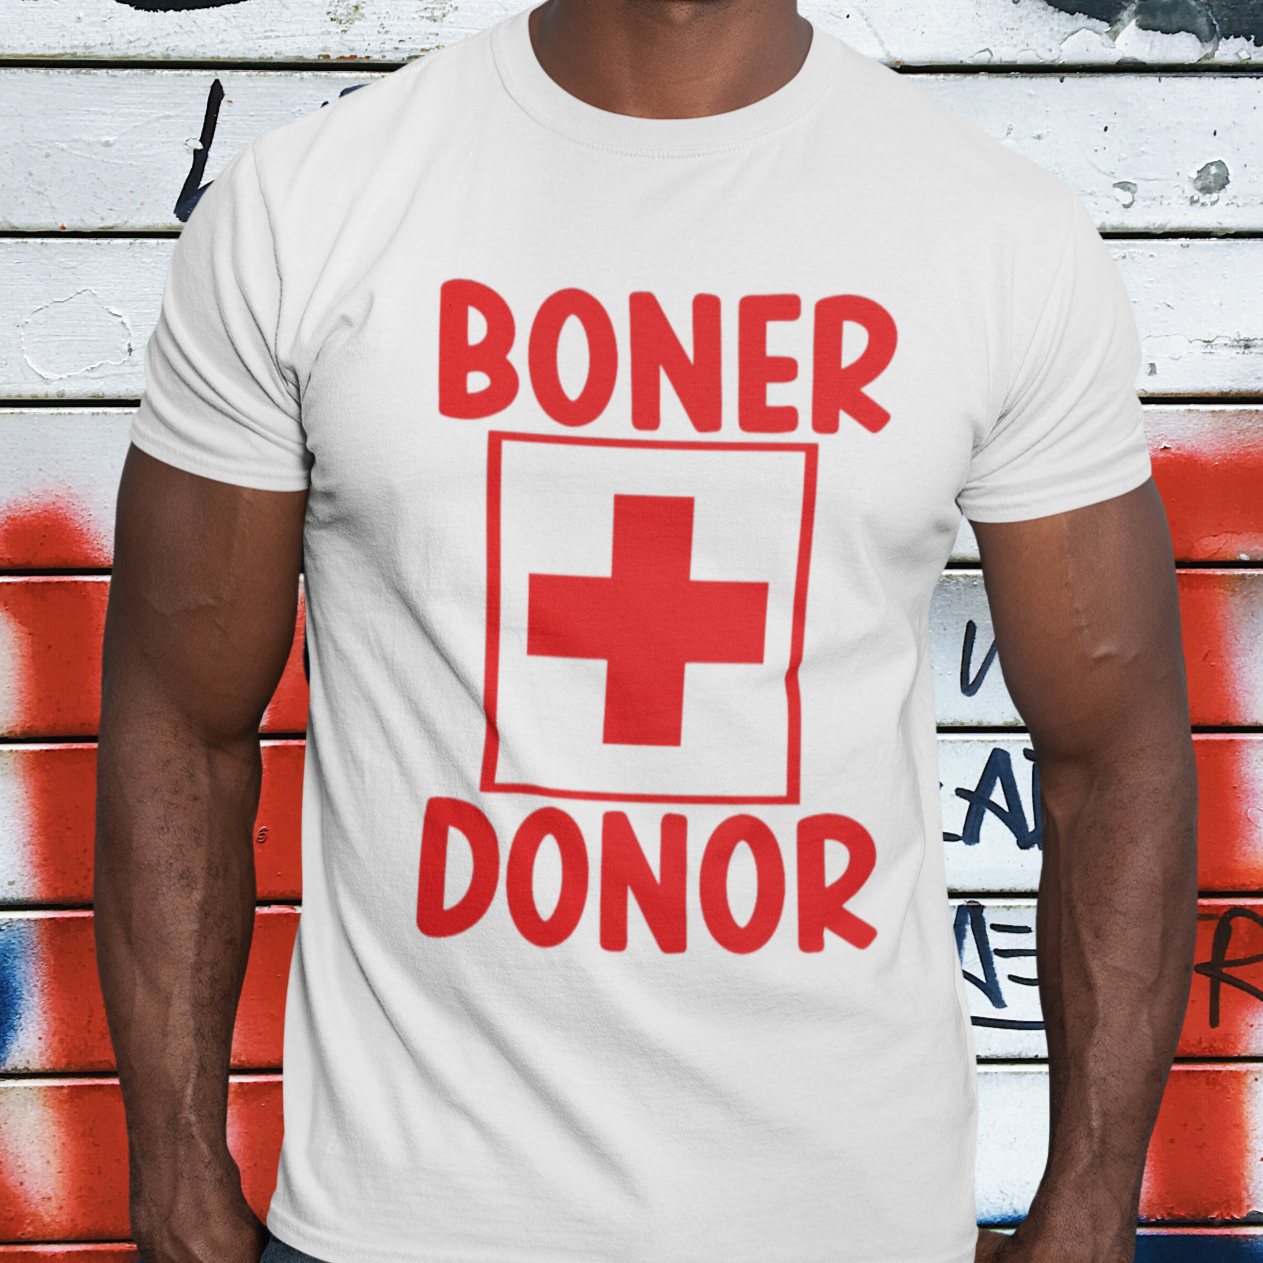 boner-donor-mockup-of-a-muscular-man-wearing-sunglasses-and-a-t-shirt